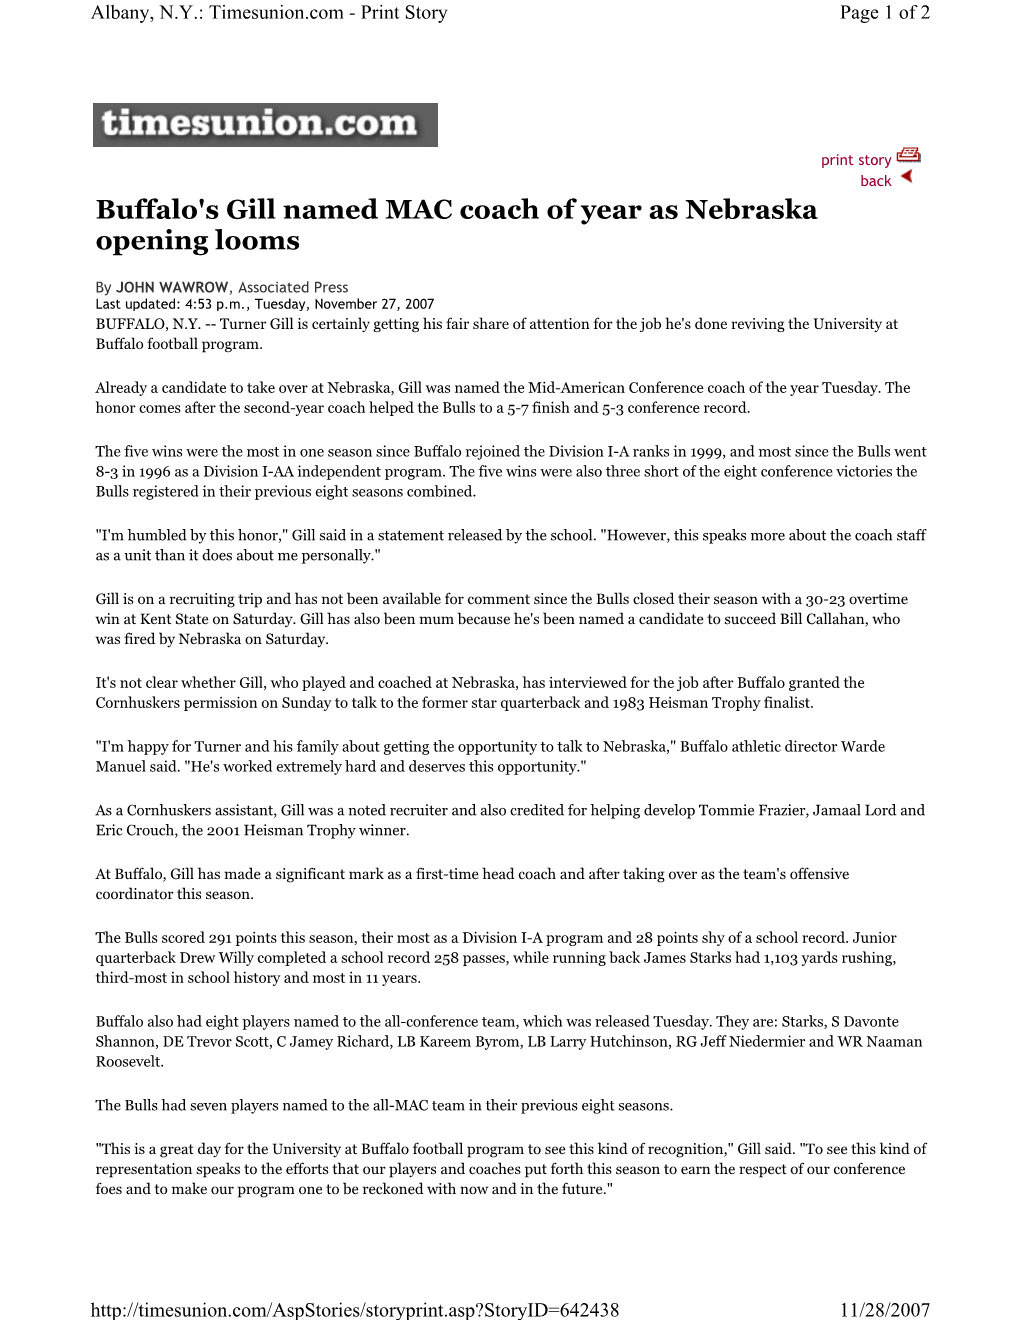 Buffalo's Gill Named MAC Coach of Year As Nebraska Opening Looms